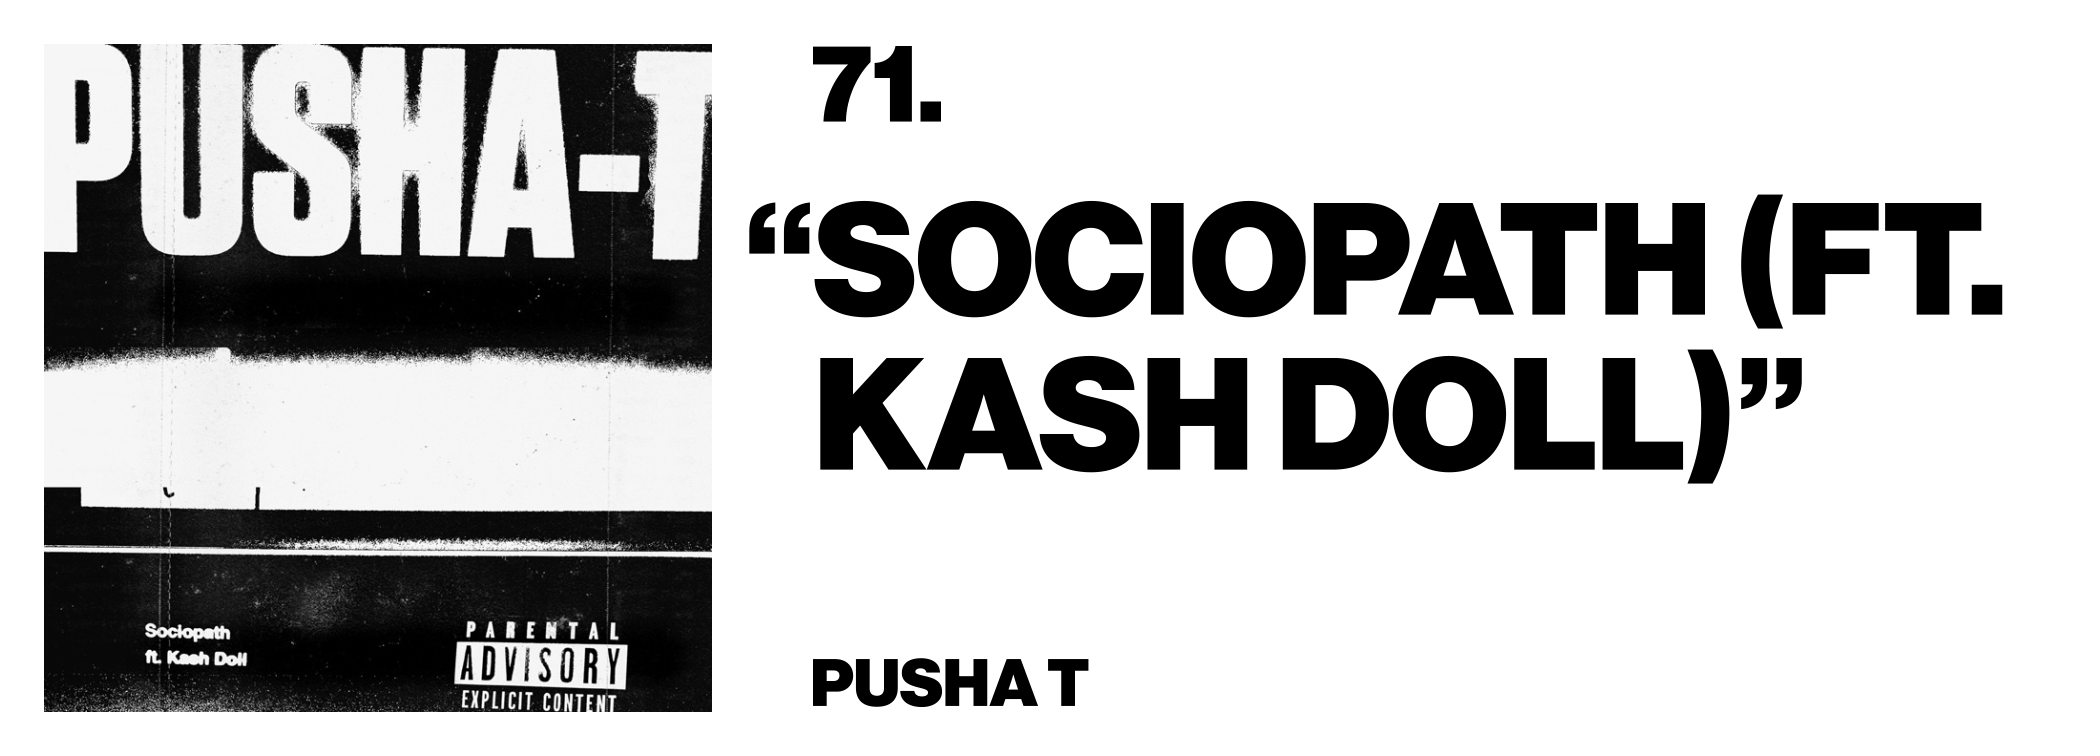 1576621748436-71-Pusha-T-_Sociopath-Ft-Kash-Doll_